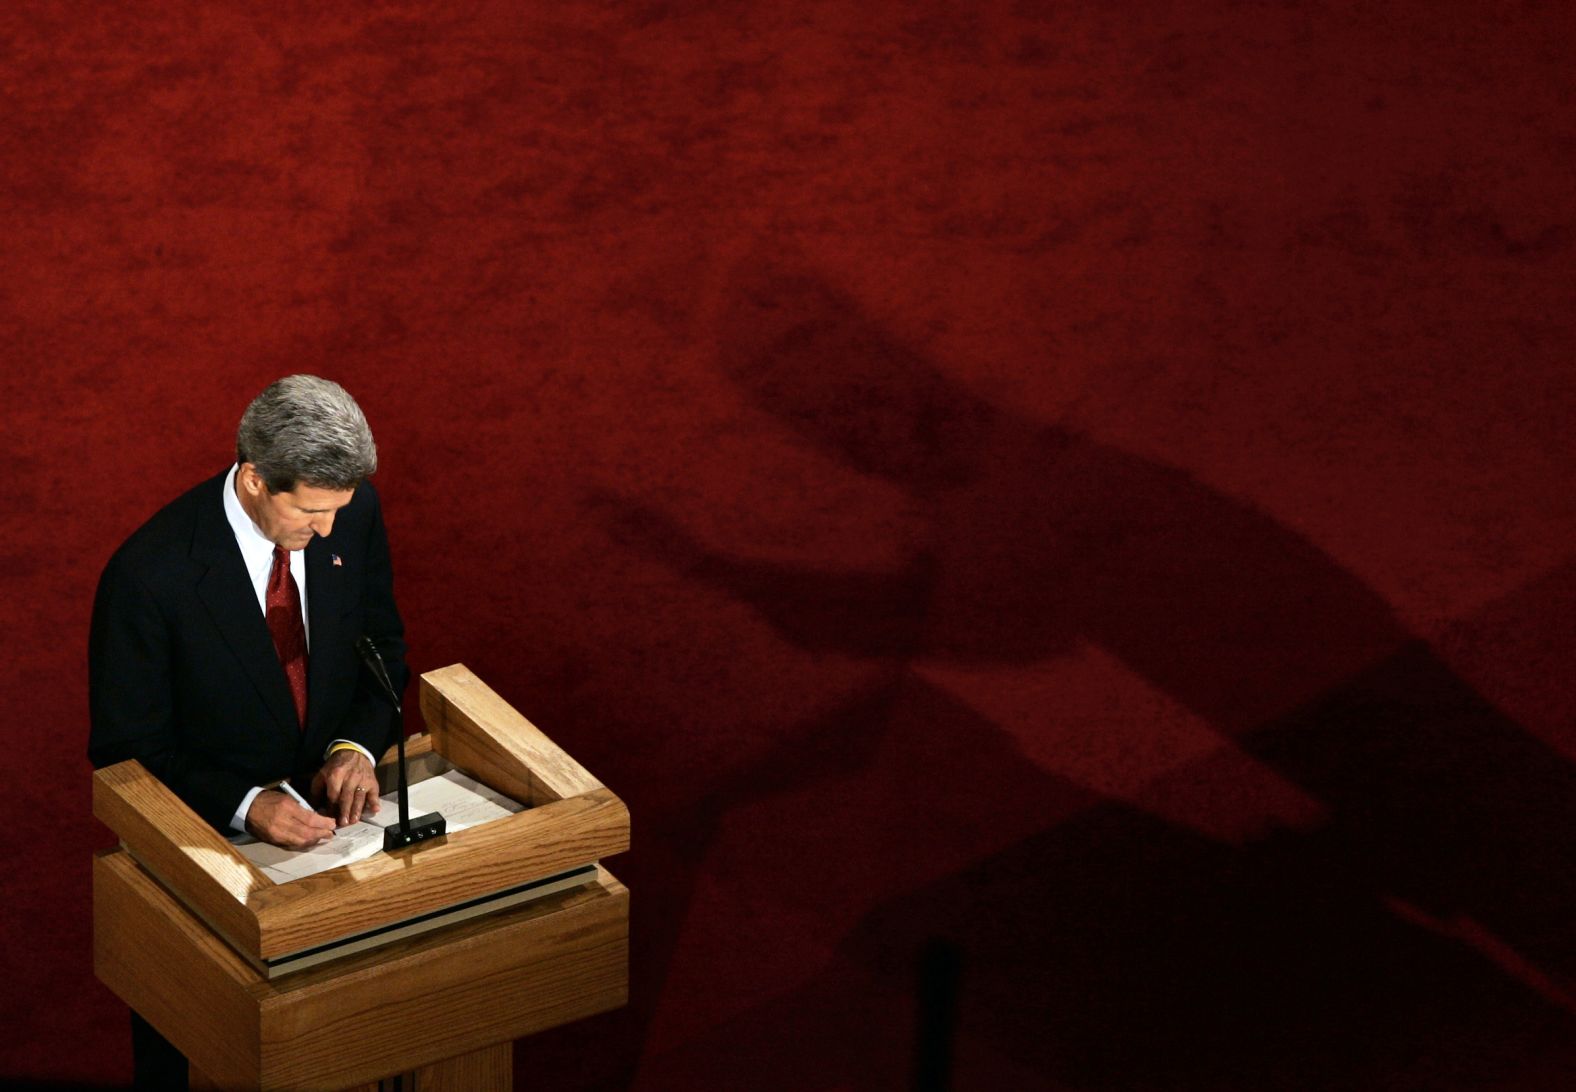 Bush's shadow is seen near challenger John Kerry during a debate in 2004.